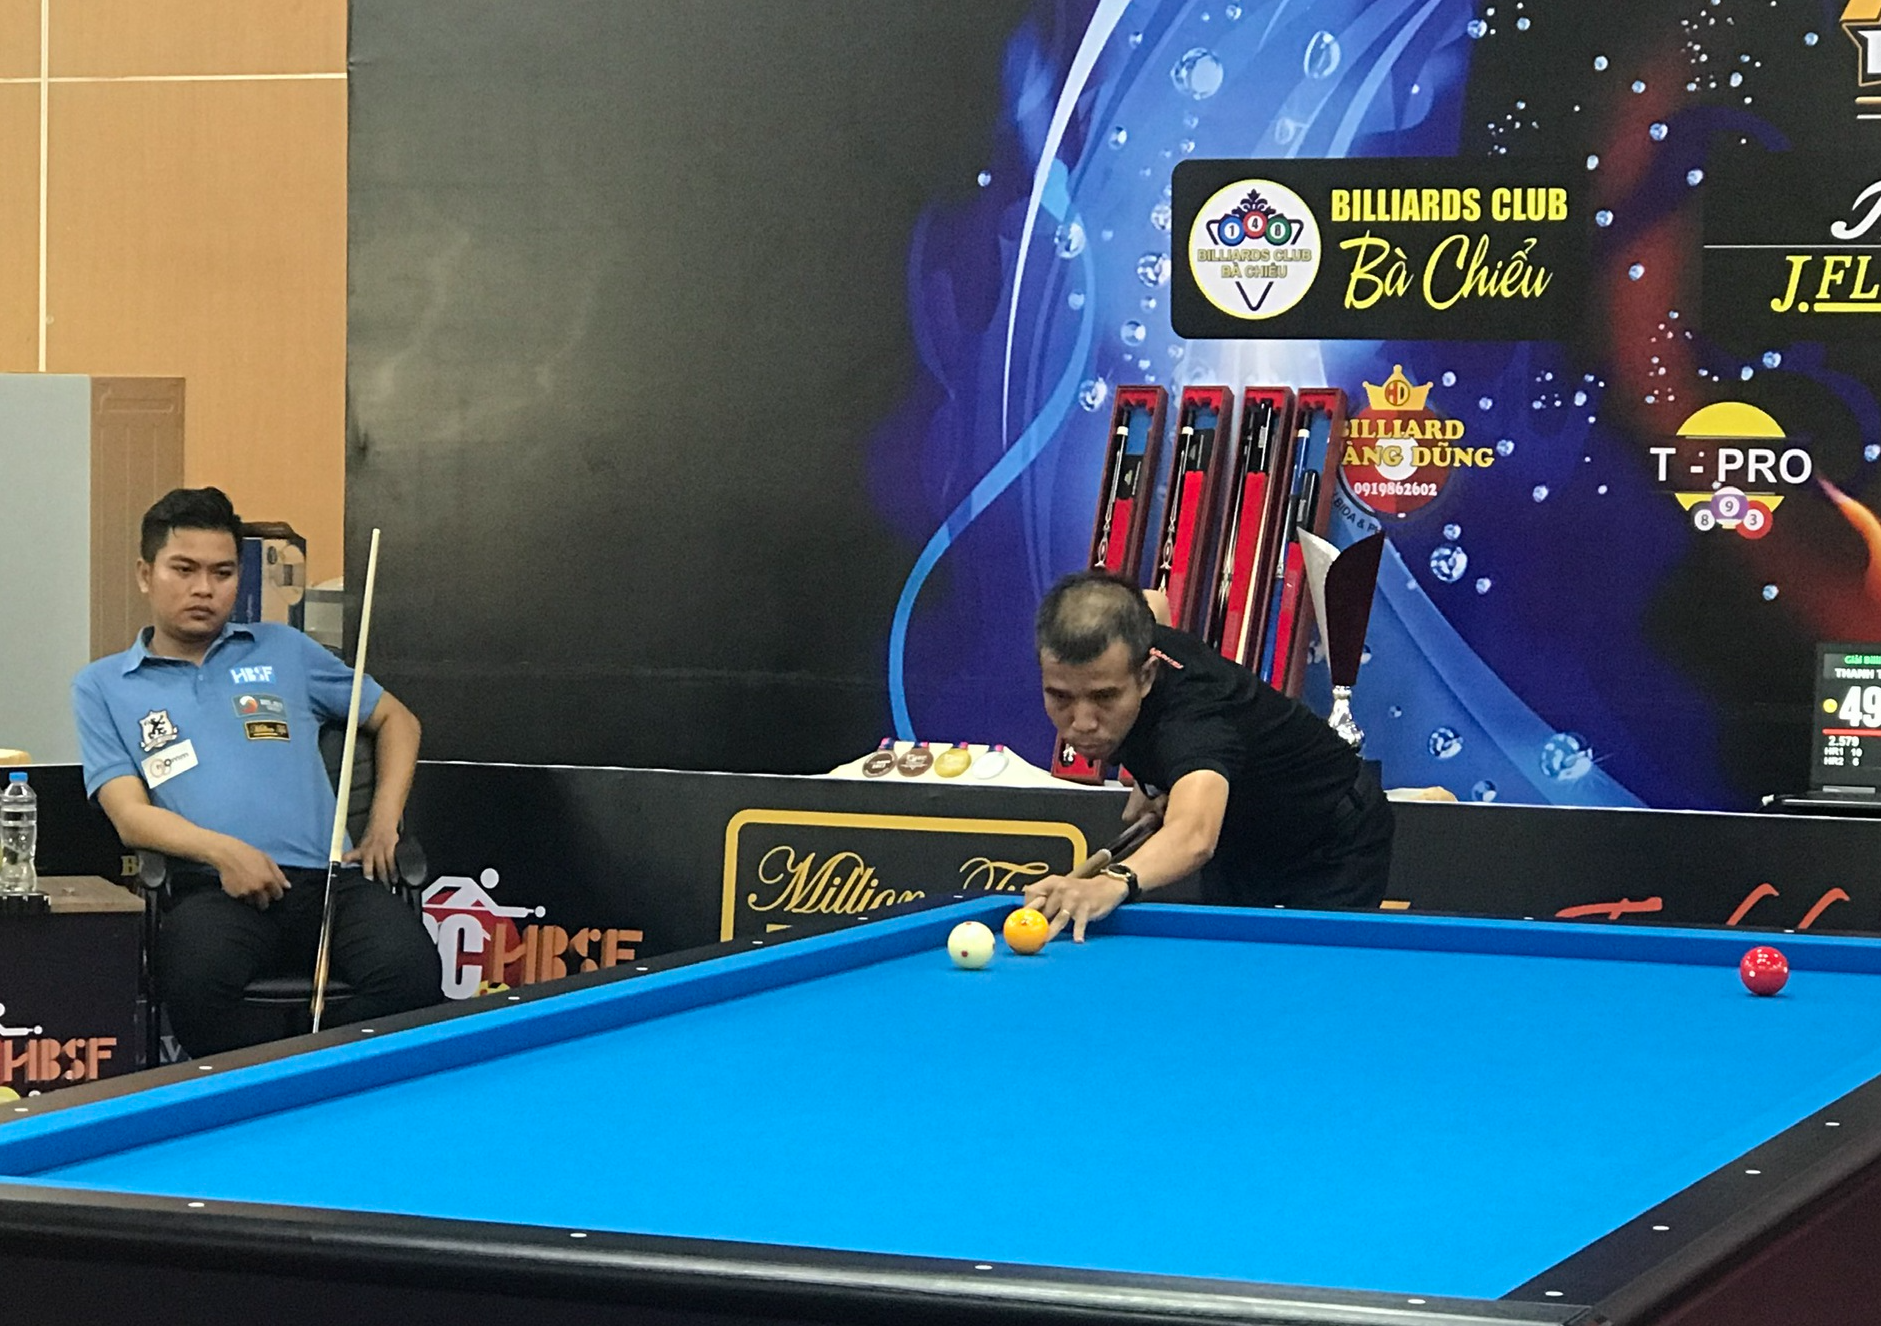 Pool Club 8, 9 Balls Billiards by Thanh Dang